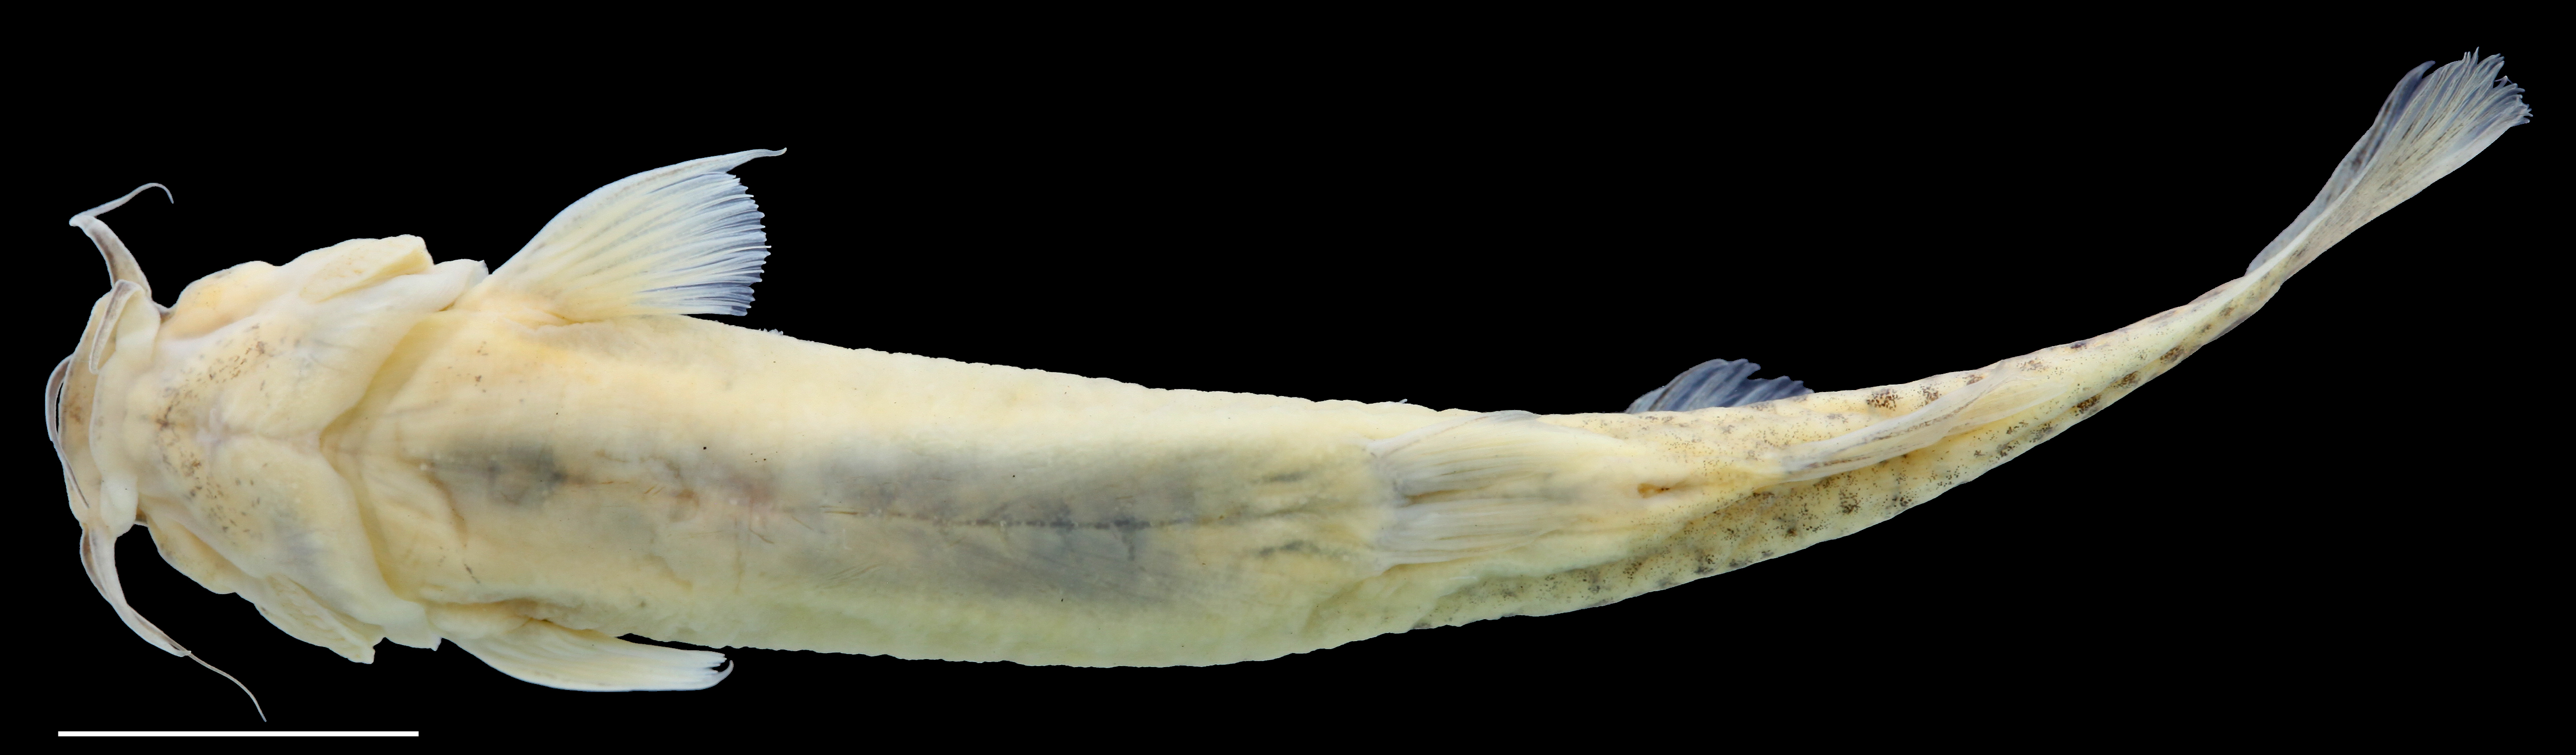 Paratype of <em>Trichomycterus torcoromaensis</em>, IAvH-P-13422_Ventral, 62.2 mm SL (scale bar = 1 cm). Photograph by C. DoNascimiento